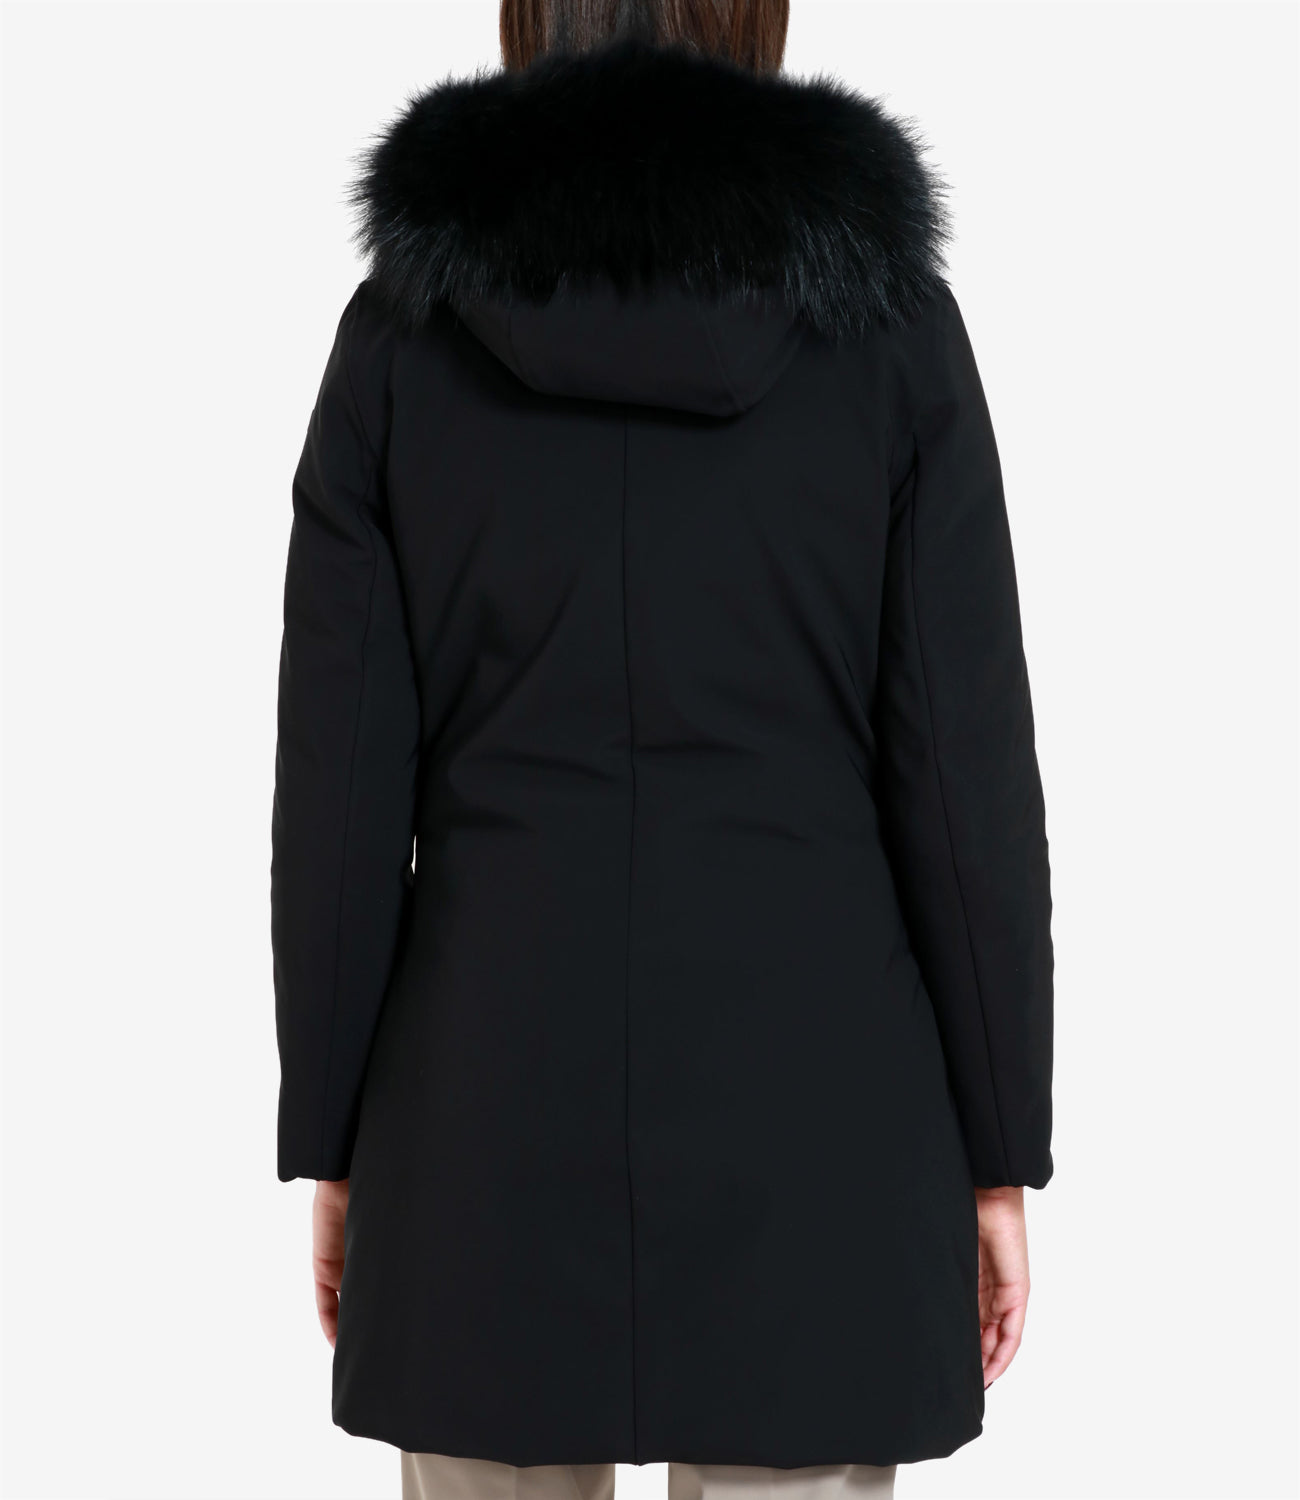 RRD | Winter Long Fur Jacket Black